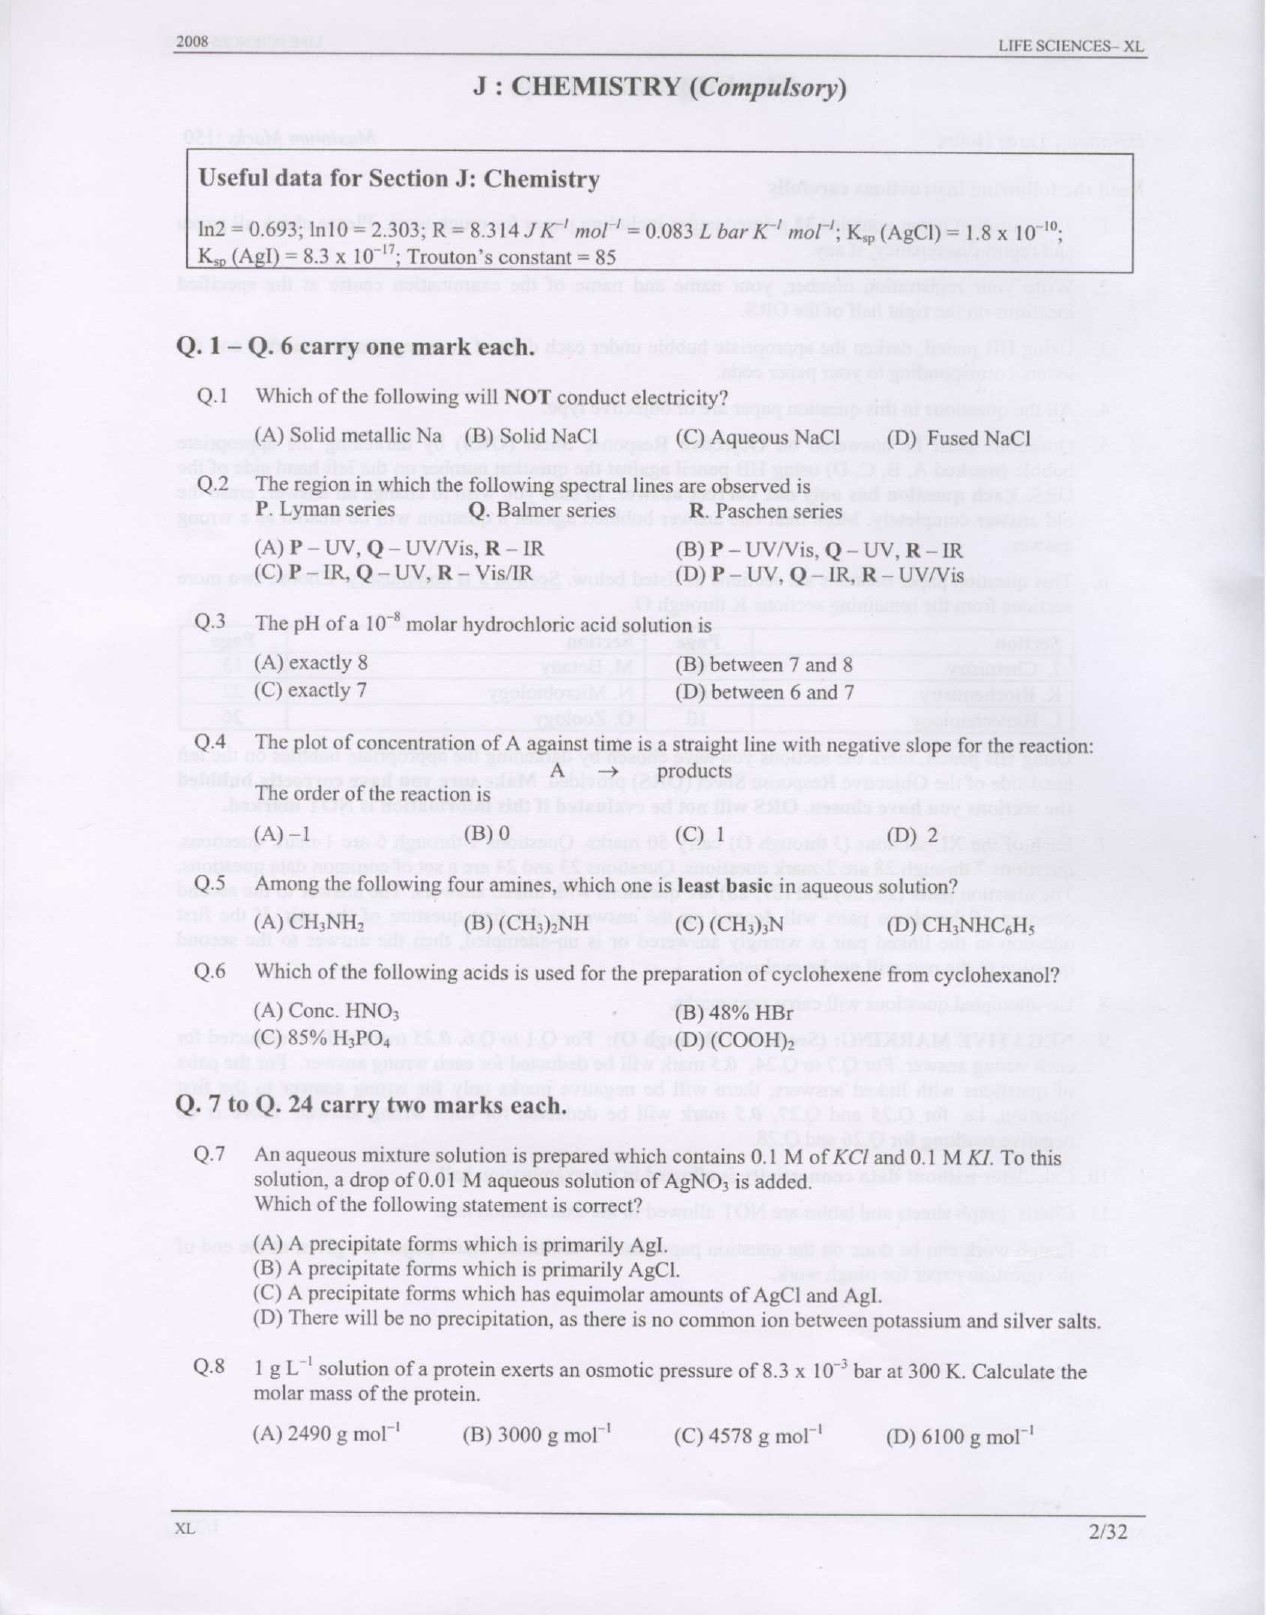 GATE Exam Question Paper 2008 Life Sciences 2